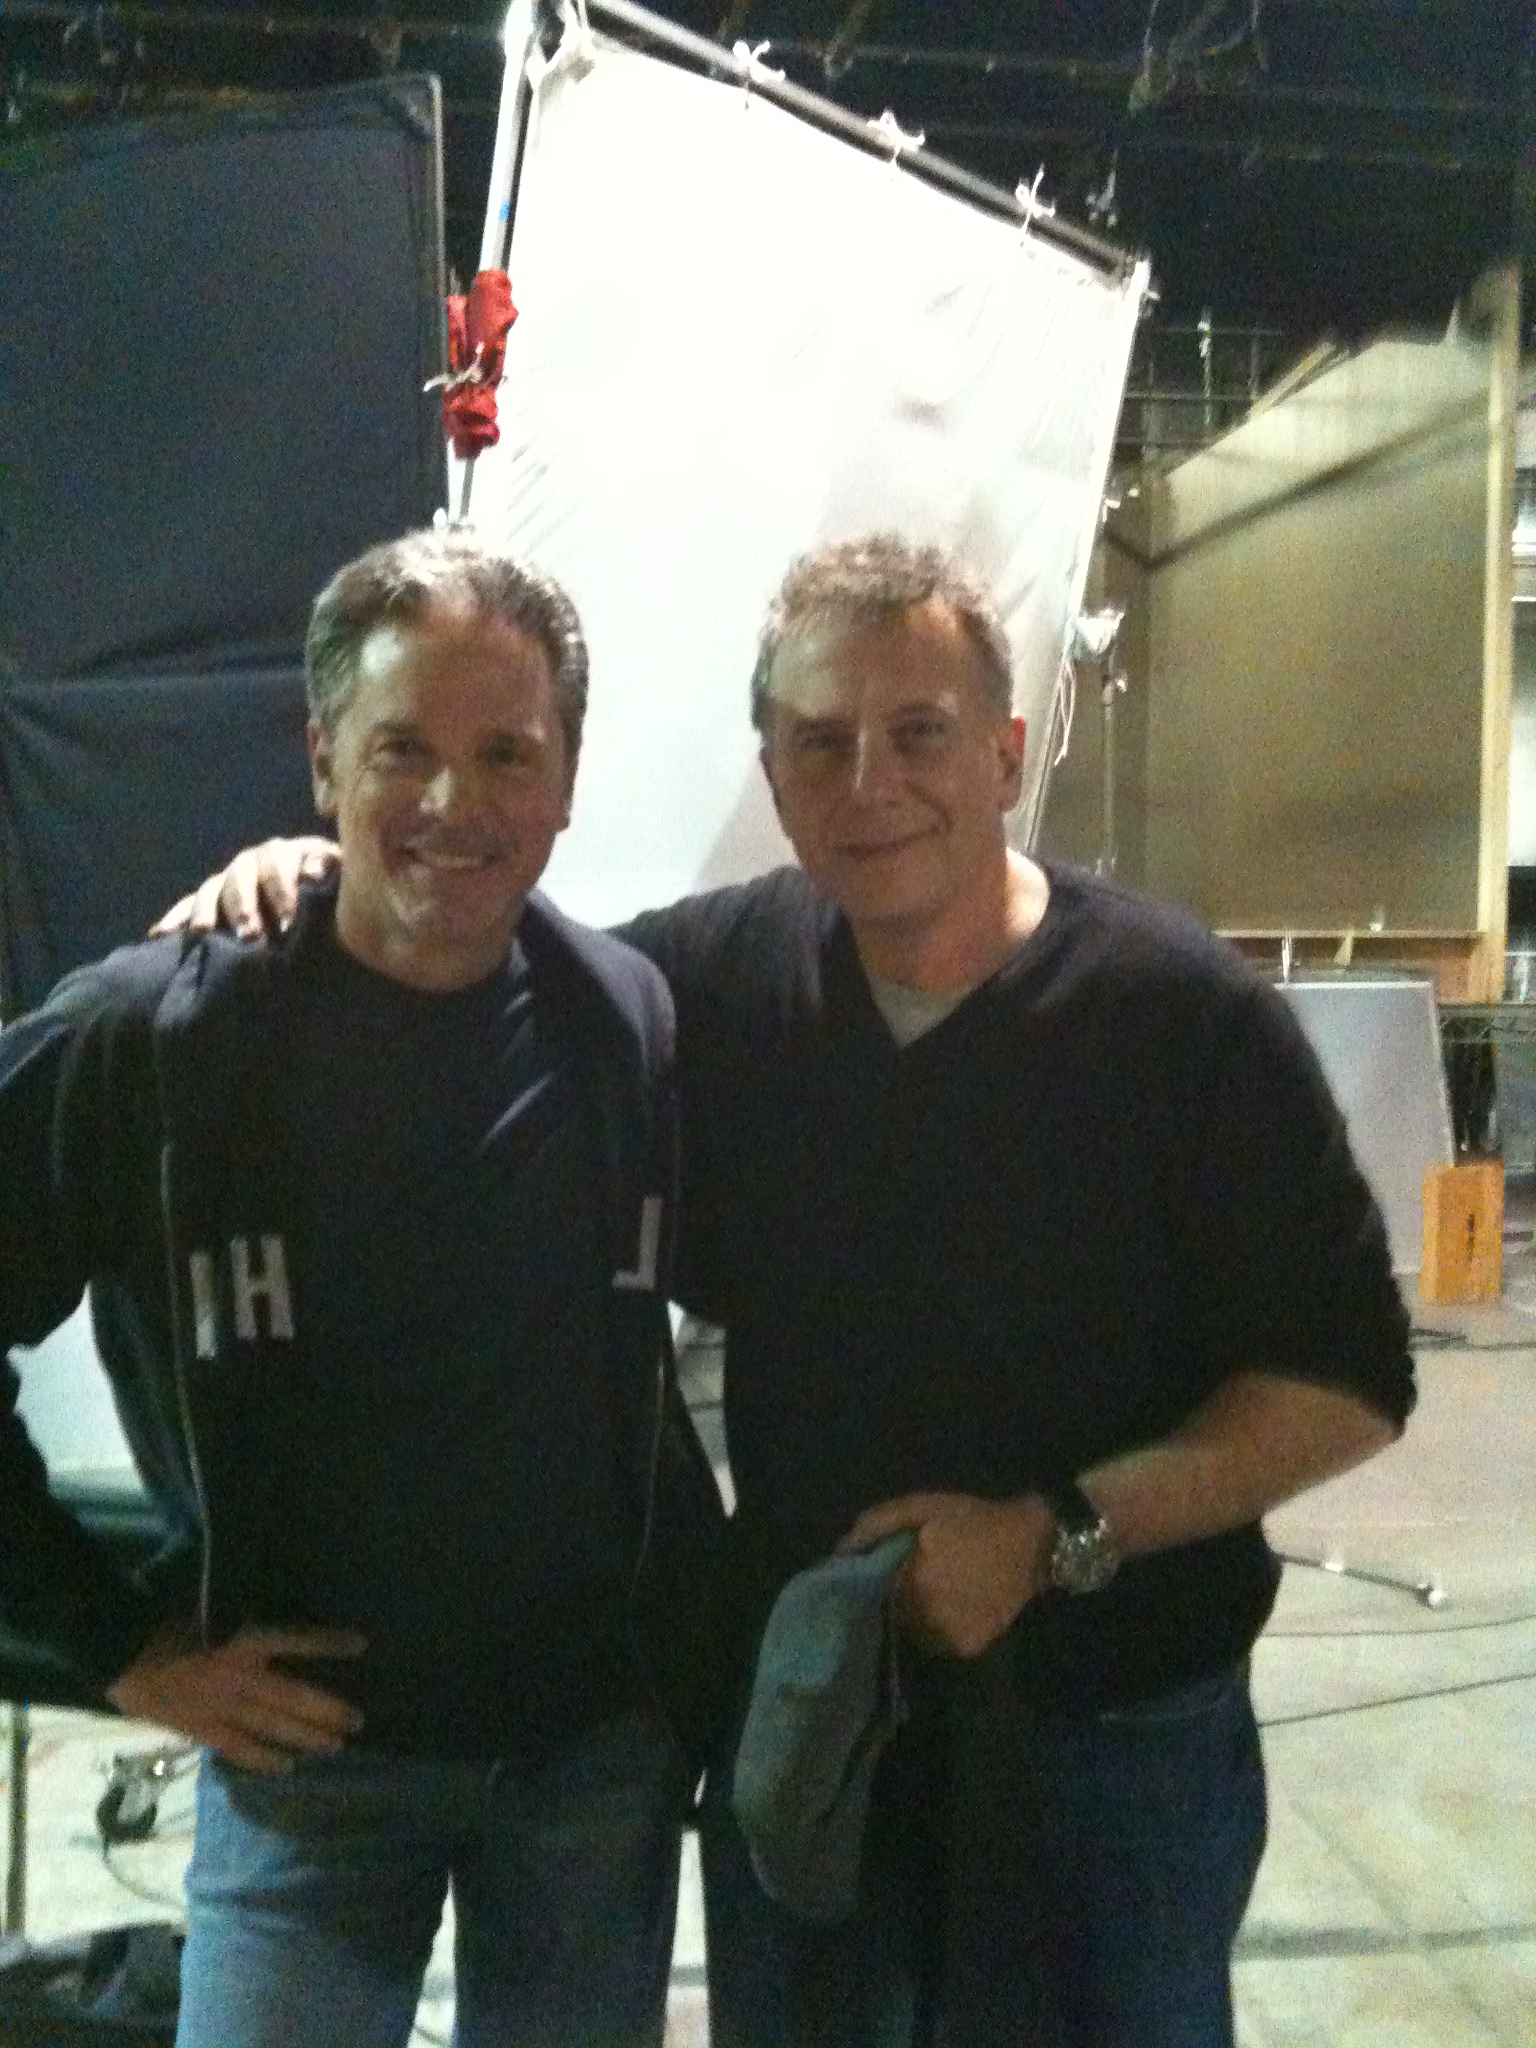 Still of Michael Keeley and Paul Reiser on the set of The Paul Reiser Show